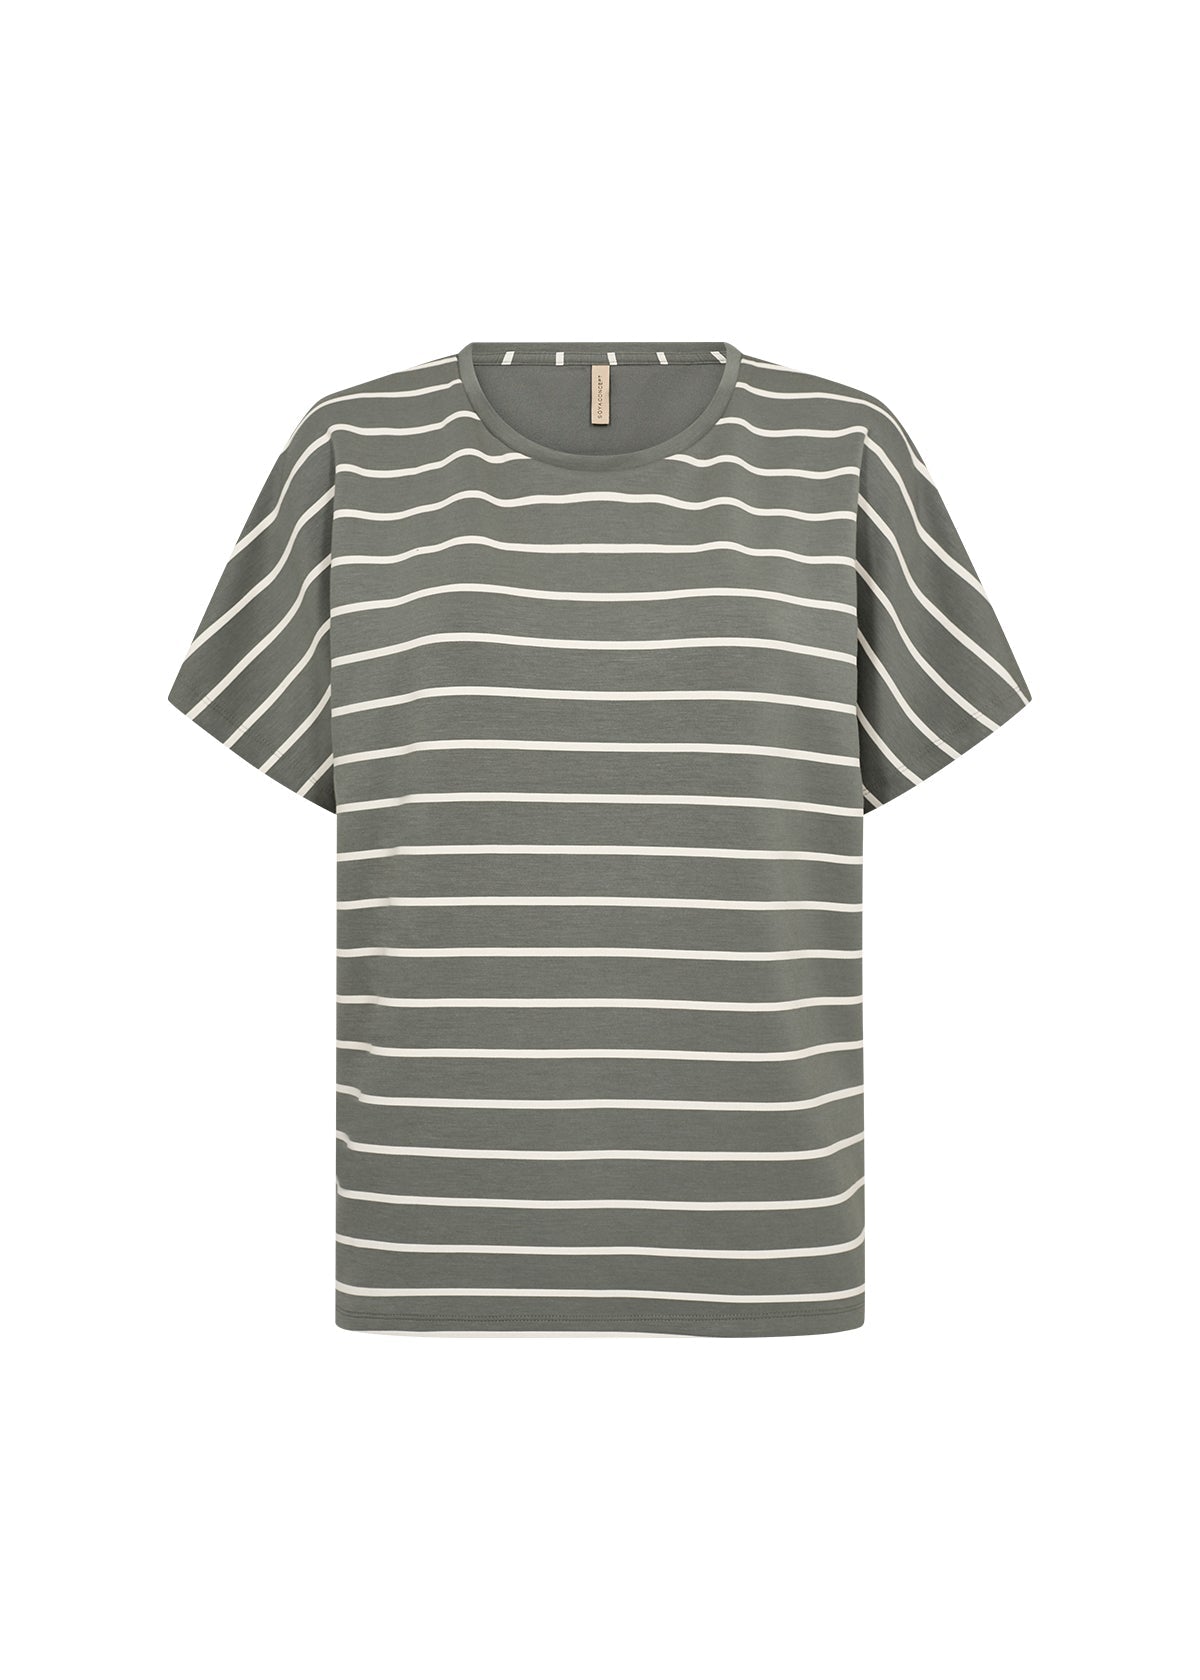 Soya Concept (26540) Women's Short Raglan Sleeve Stripes T-Shirt in Misty Green/Grey with White Stripes